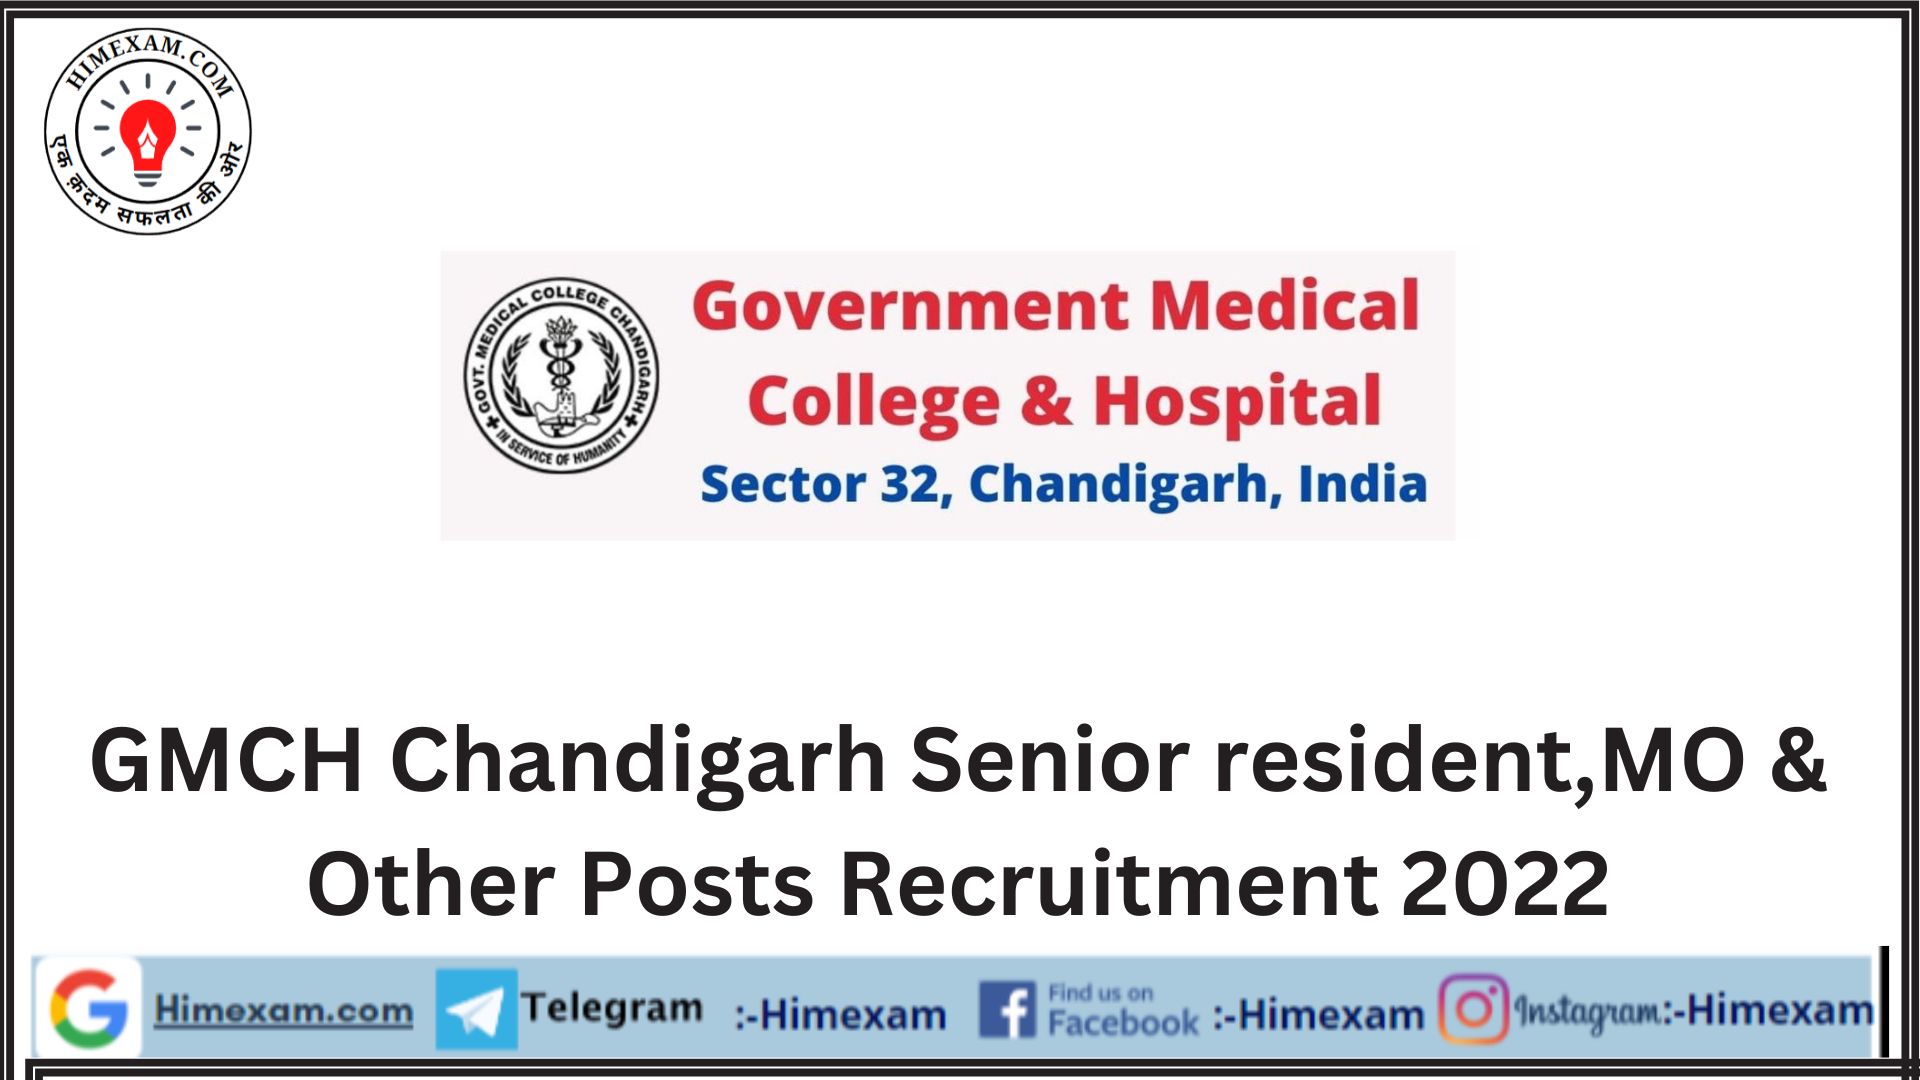 GMCH Chandigarh Senior resident,MO & Other Posts Recruitment 2022